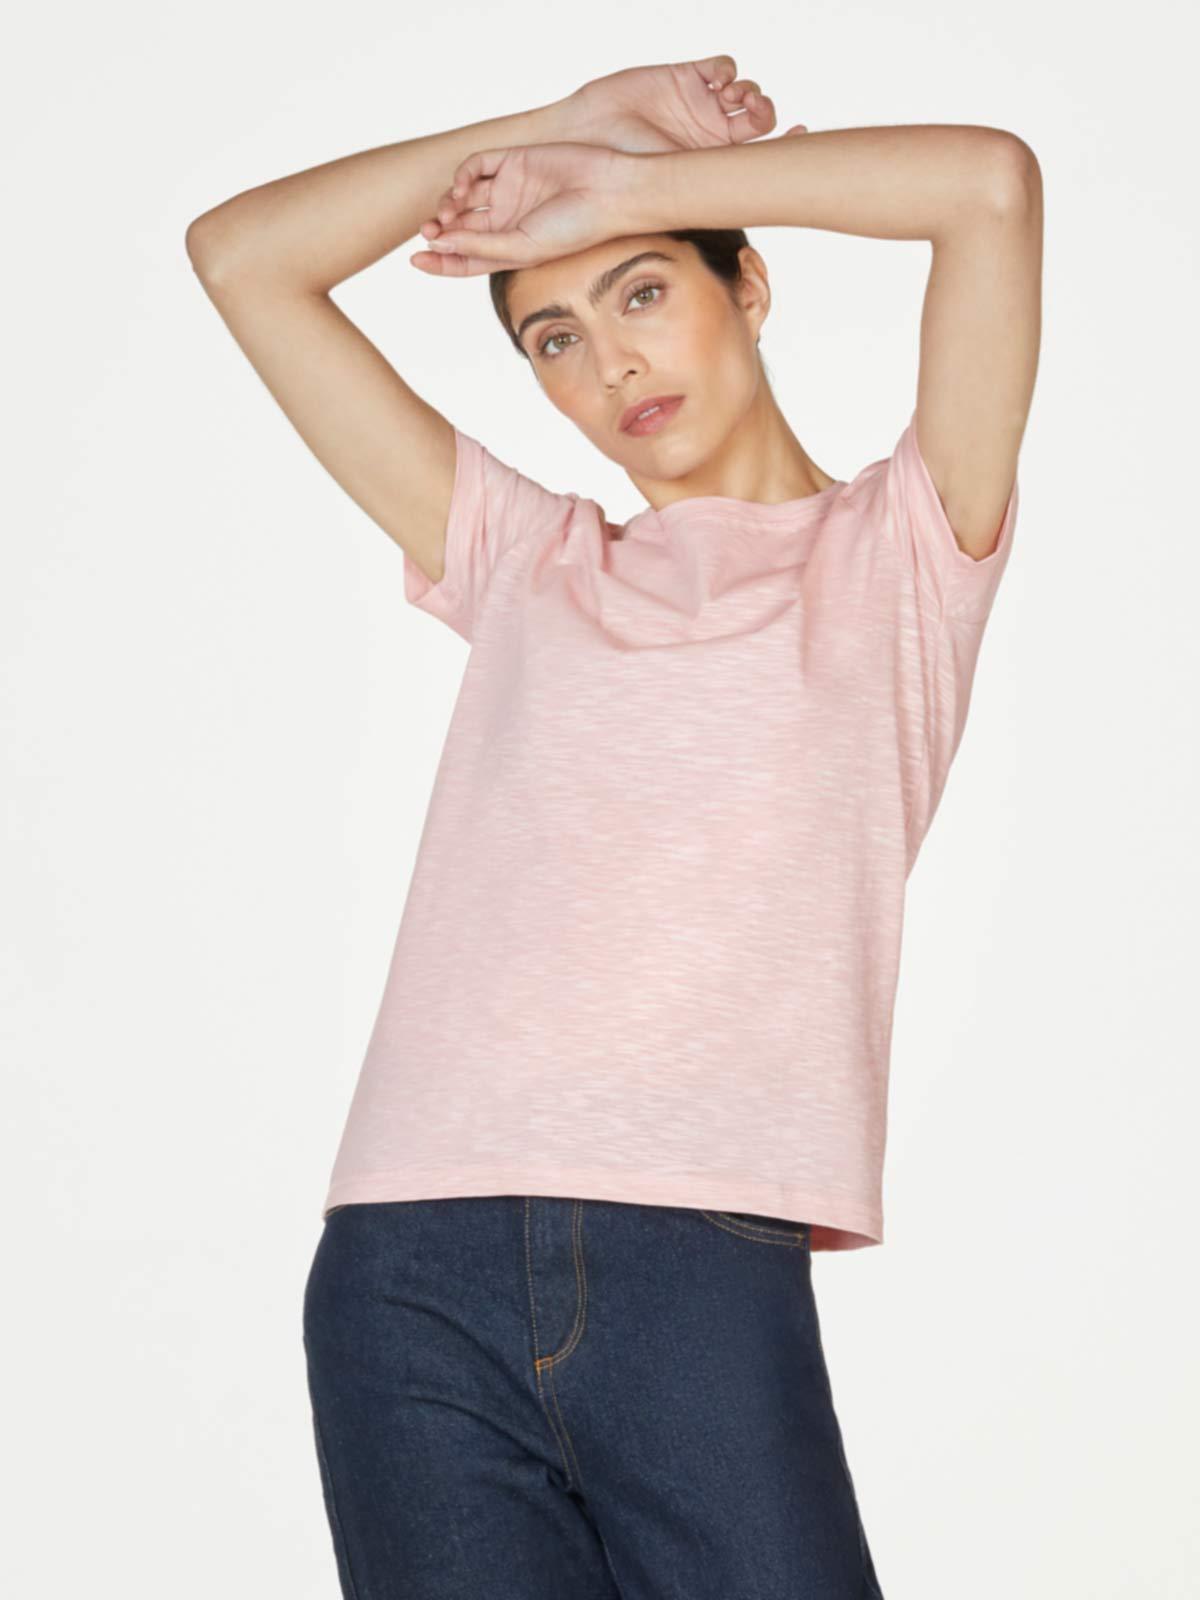 Fairtrade GOTS Organic Cotton Short Sleeve T-Shirt - Thought Clothing UK